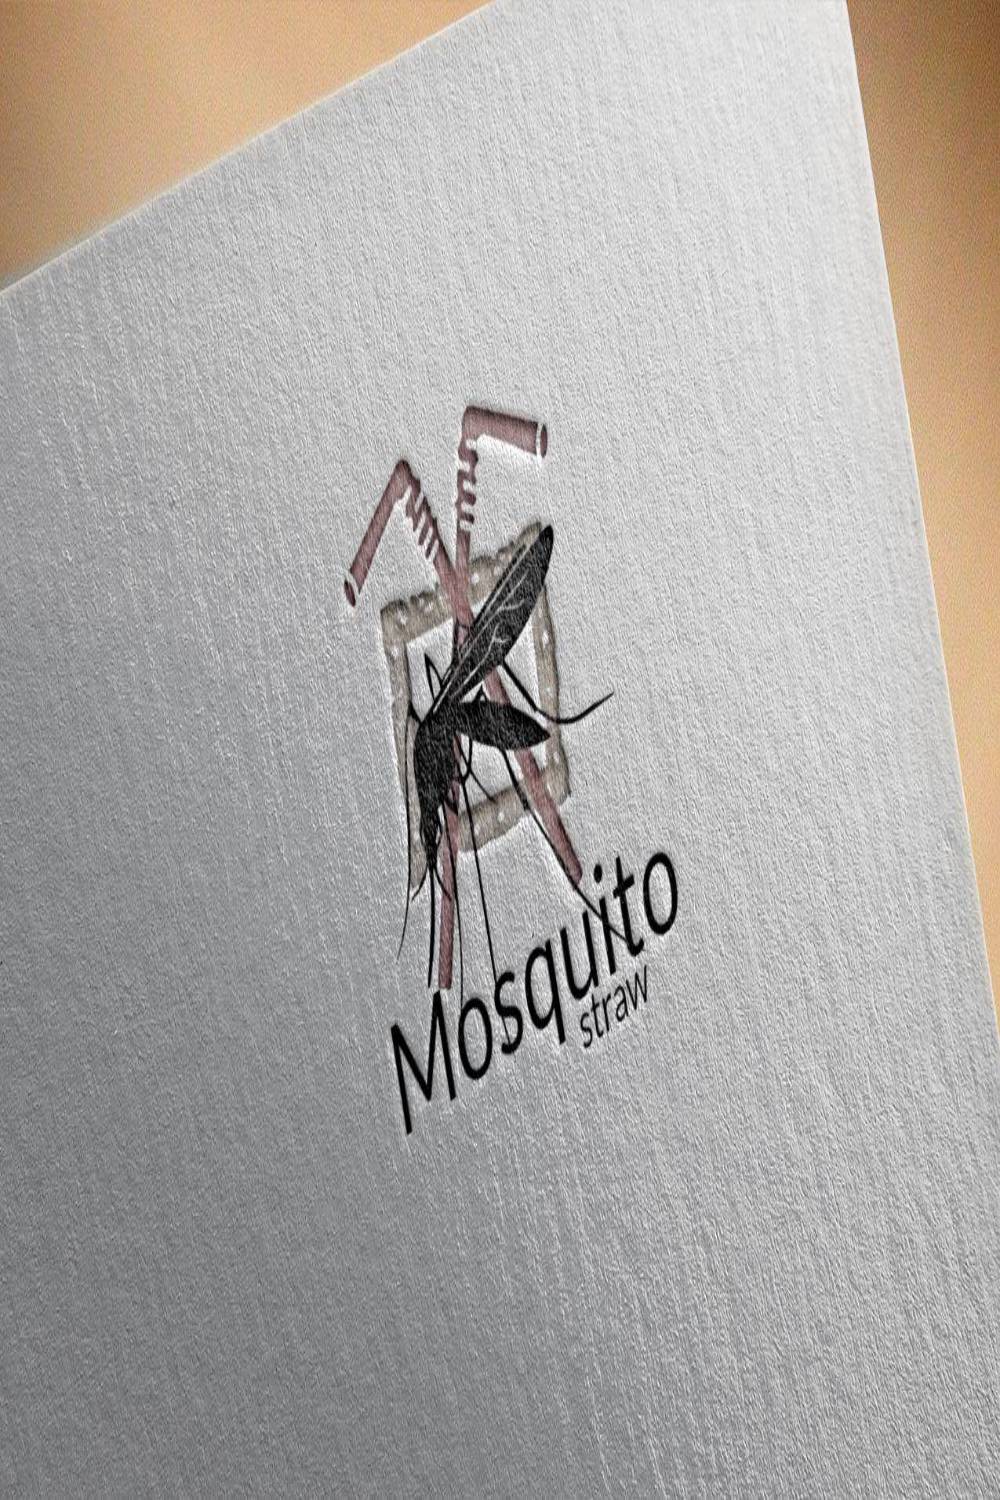 Mosquito Strav Logo Design pinterest image.